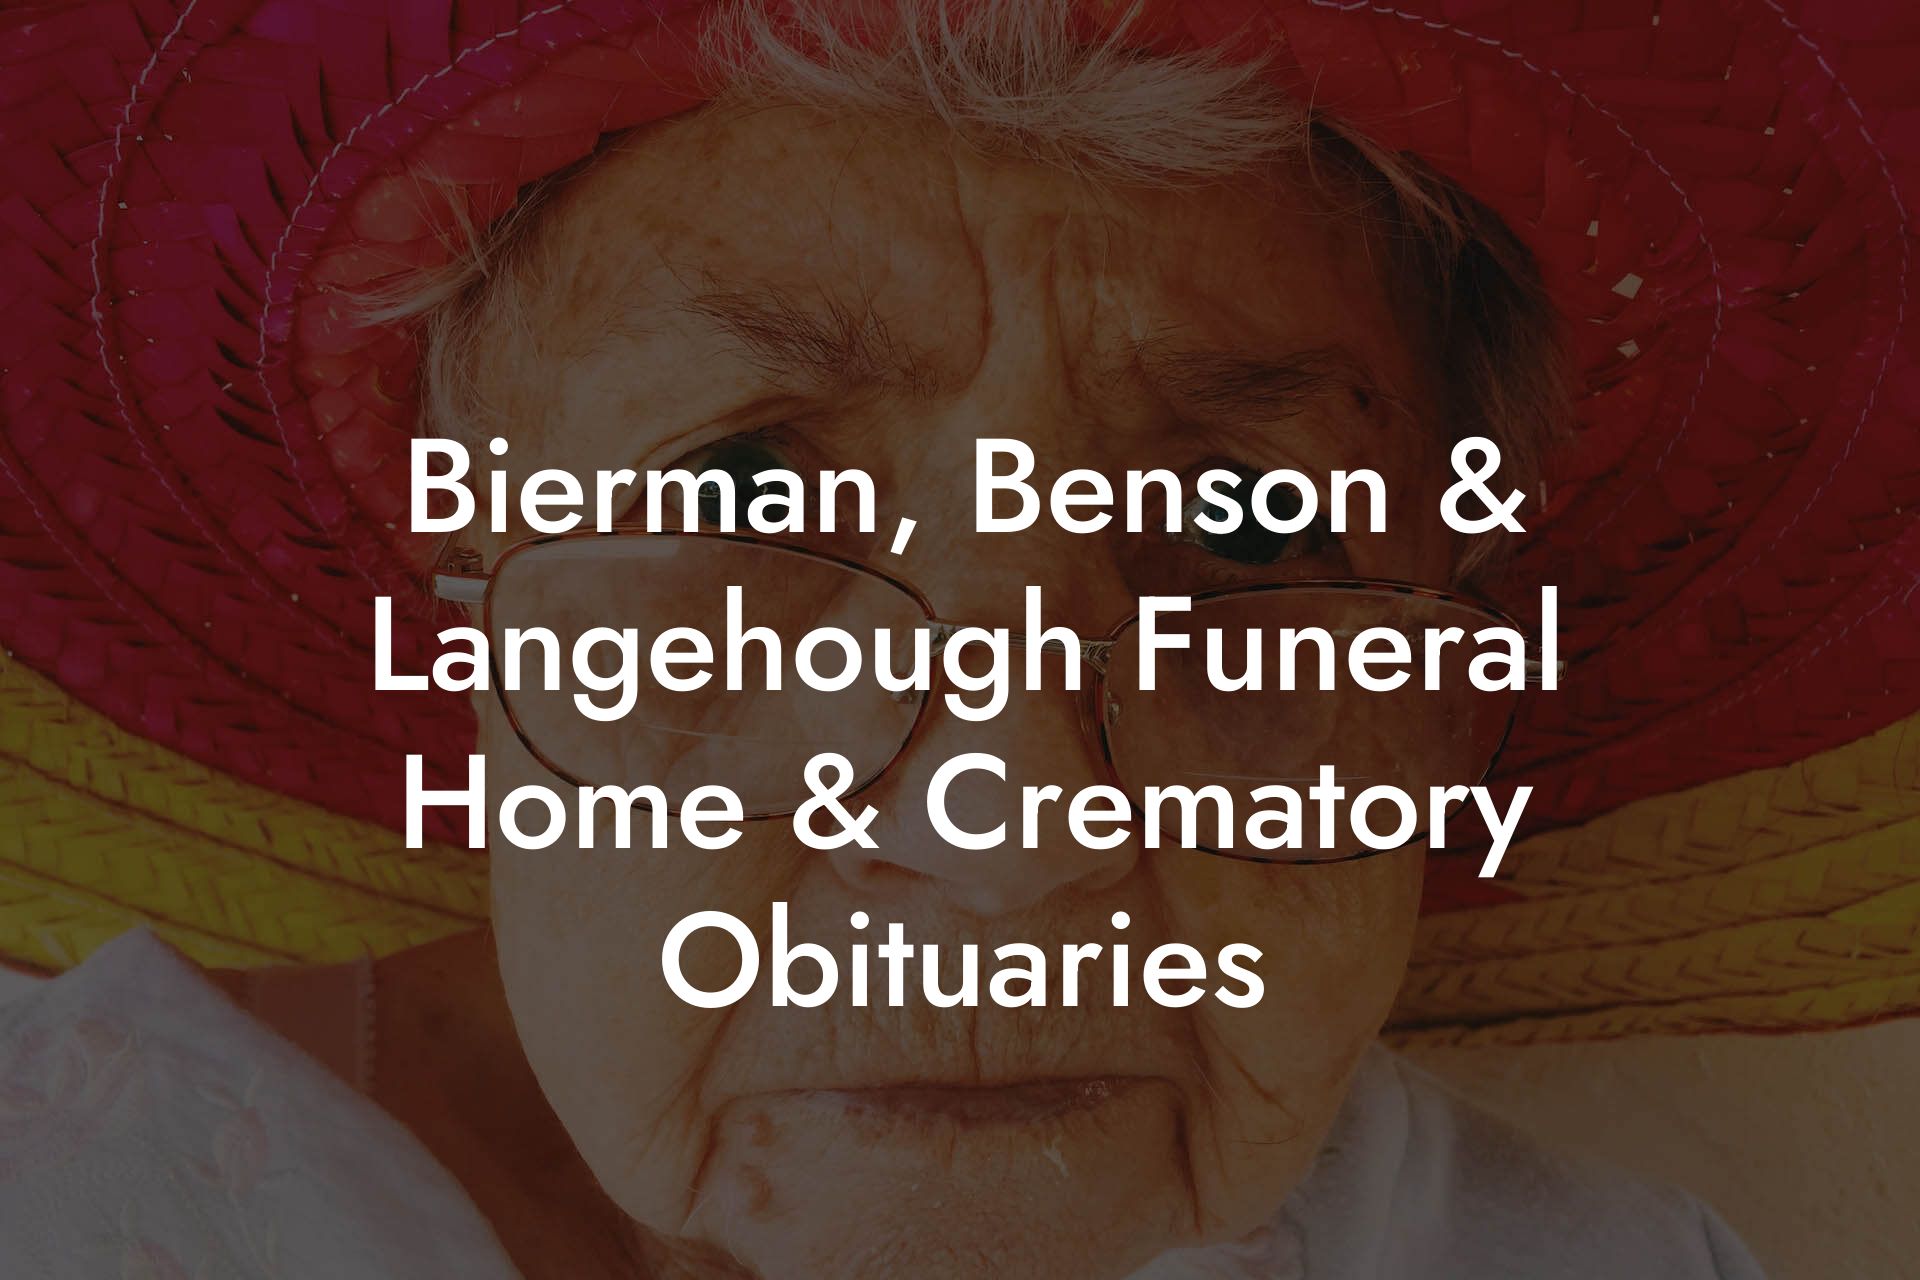 Bierman, Benson & Langehough Funeral Home & Crematory Obituaries